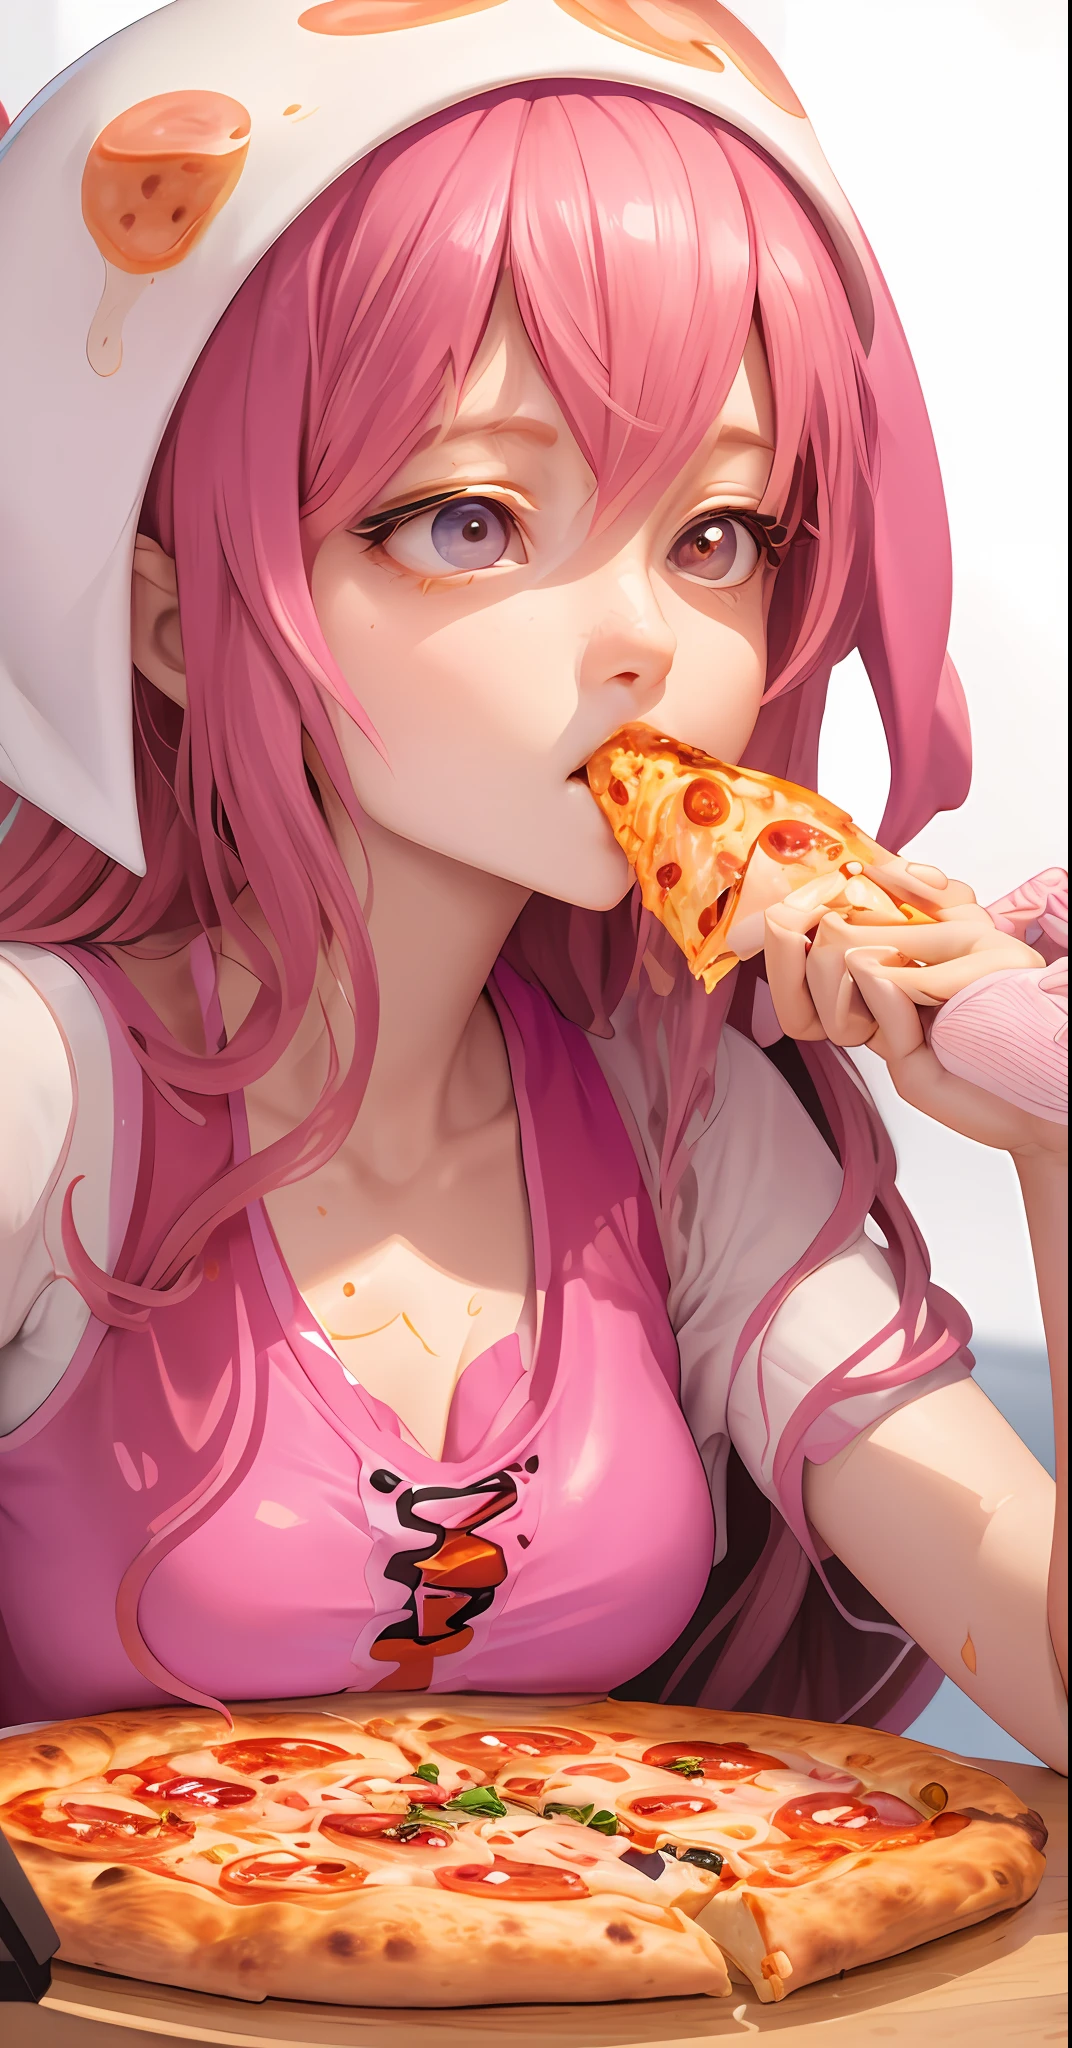 there is a woman sitting at a table with a пицца and octopus tentacles, munching пицца, eating пицца, щупальца обвивают гамбургеры, пицца!, щупальца вокруг, presenting пицца, гуманоид розовый женский кальмар девушка, eating a пицца, аниме еда, Детализированное цифровое аниме-арт, пицца, потрясающая иллюстрация еды, sharing a пицца, какие-то щупальца касаются ее